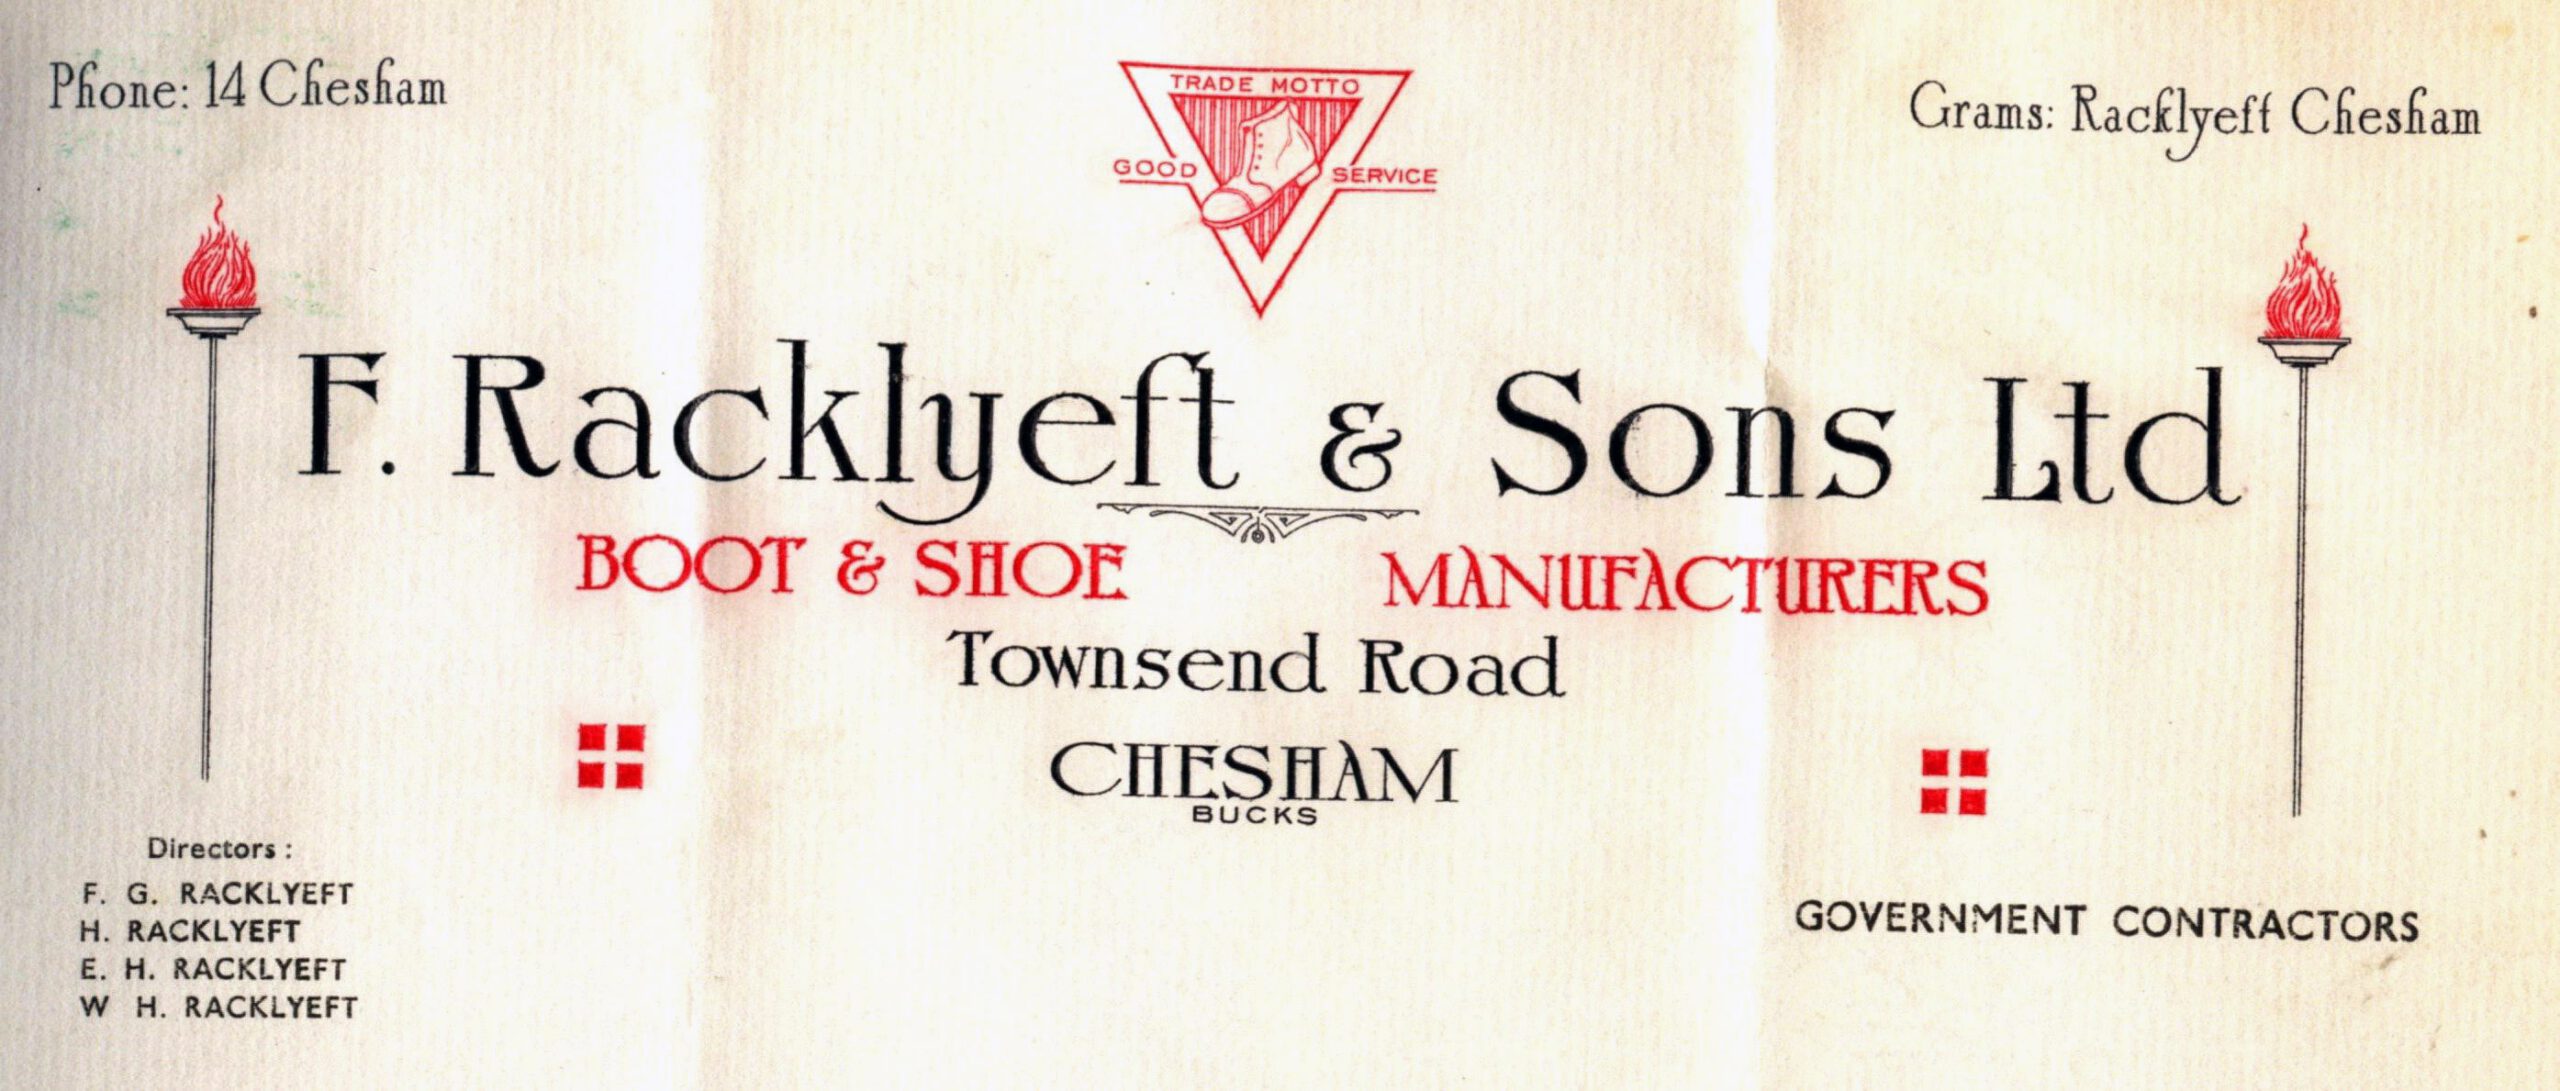 F.Racklyeft & Sons Ltd letterhead